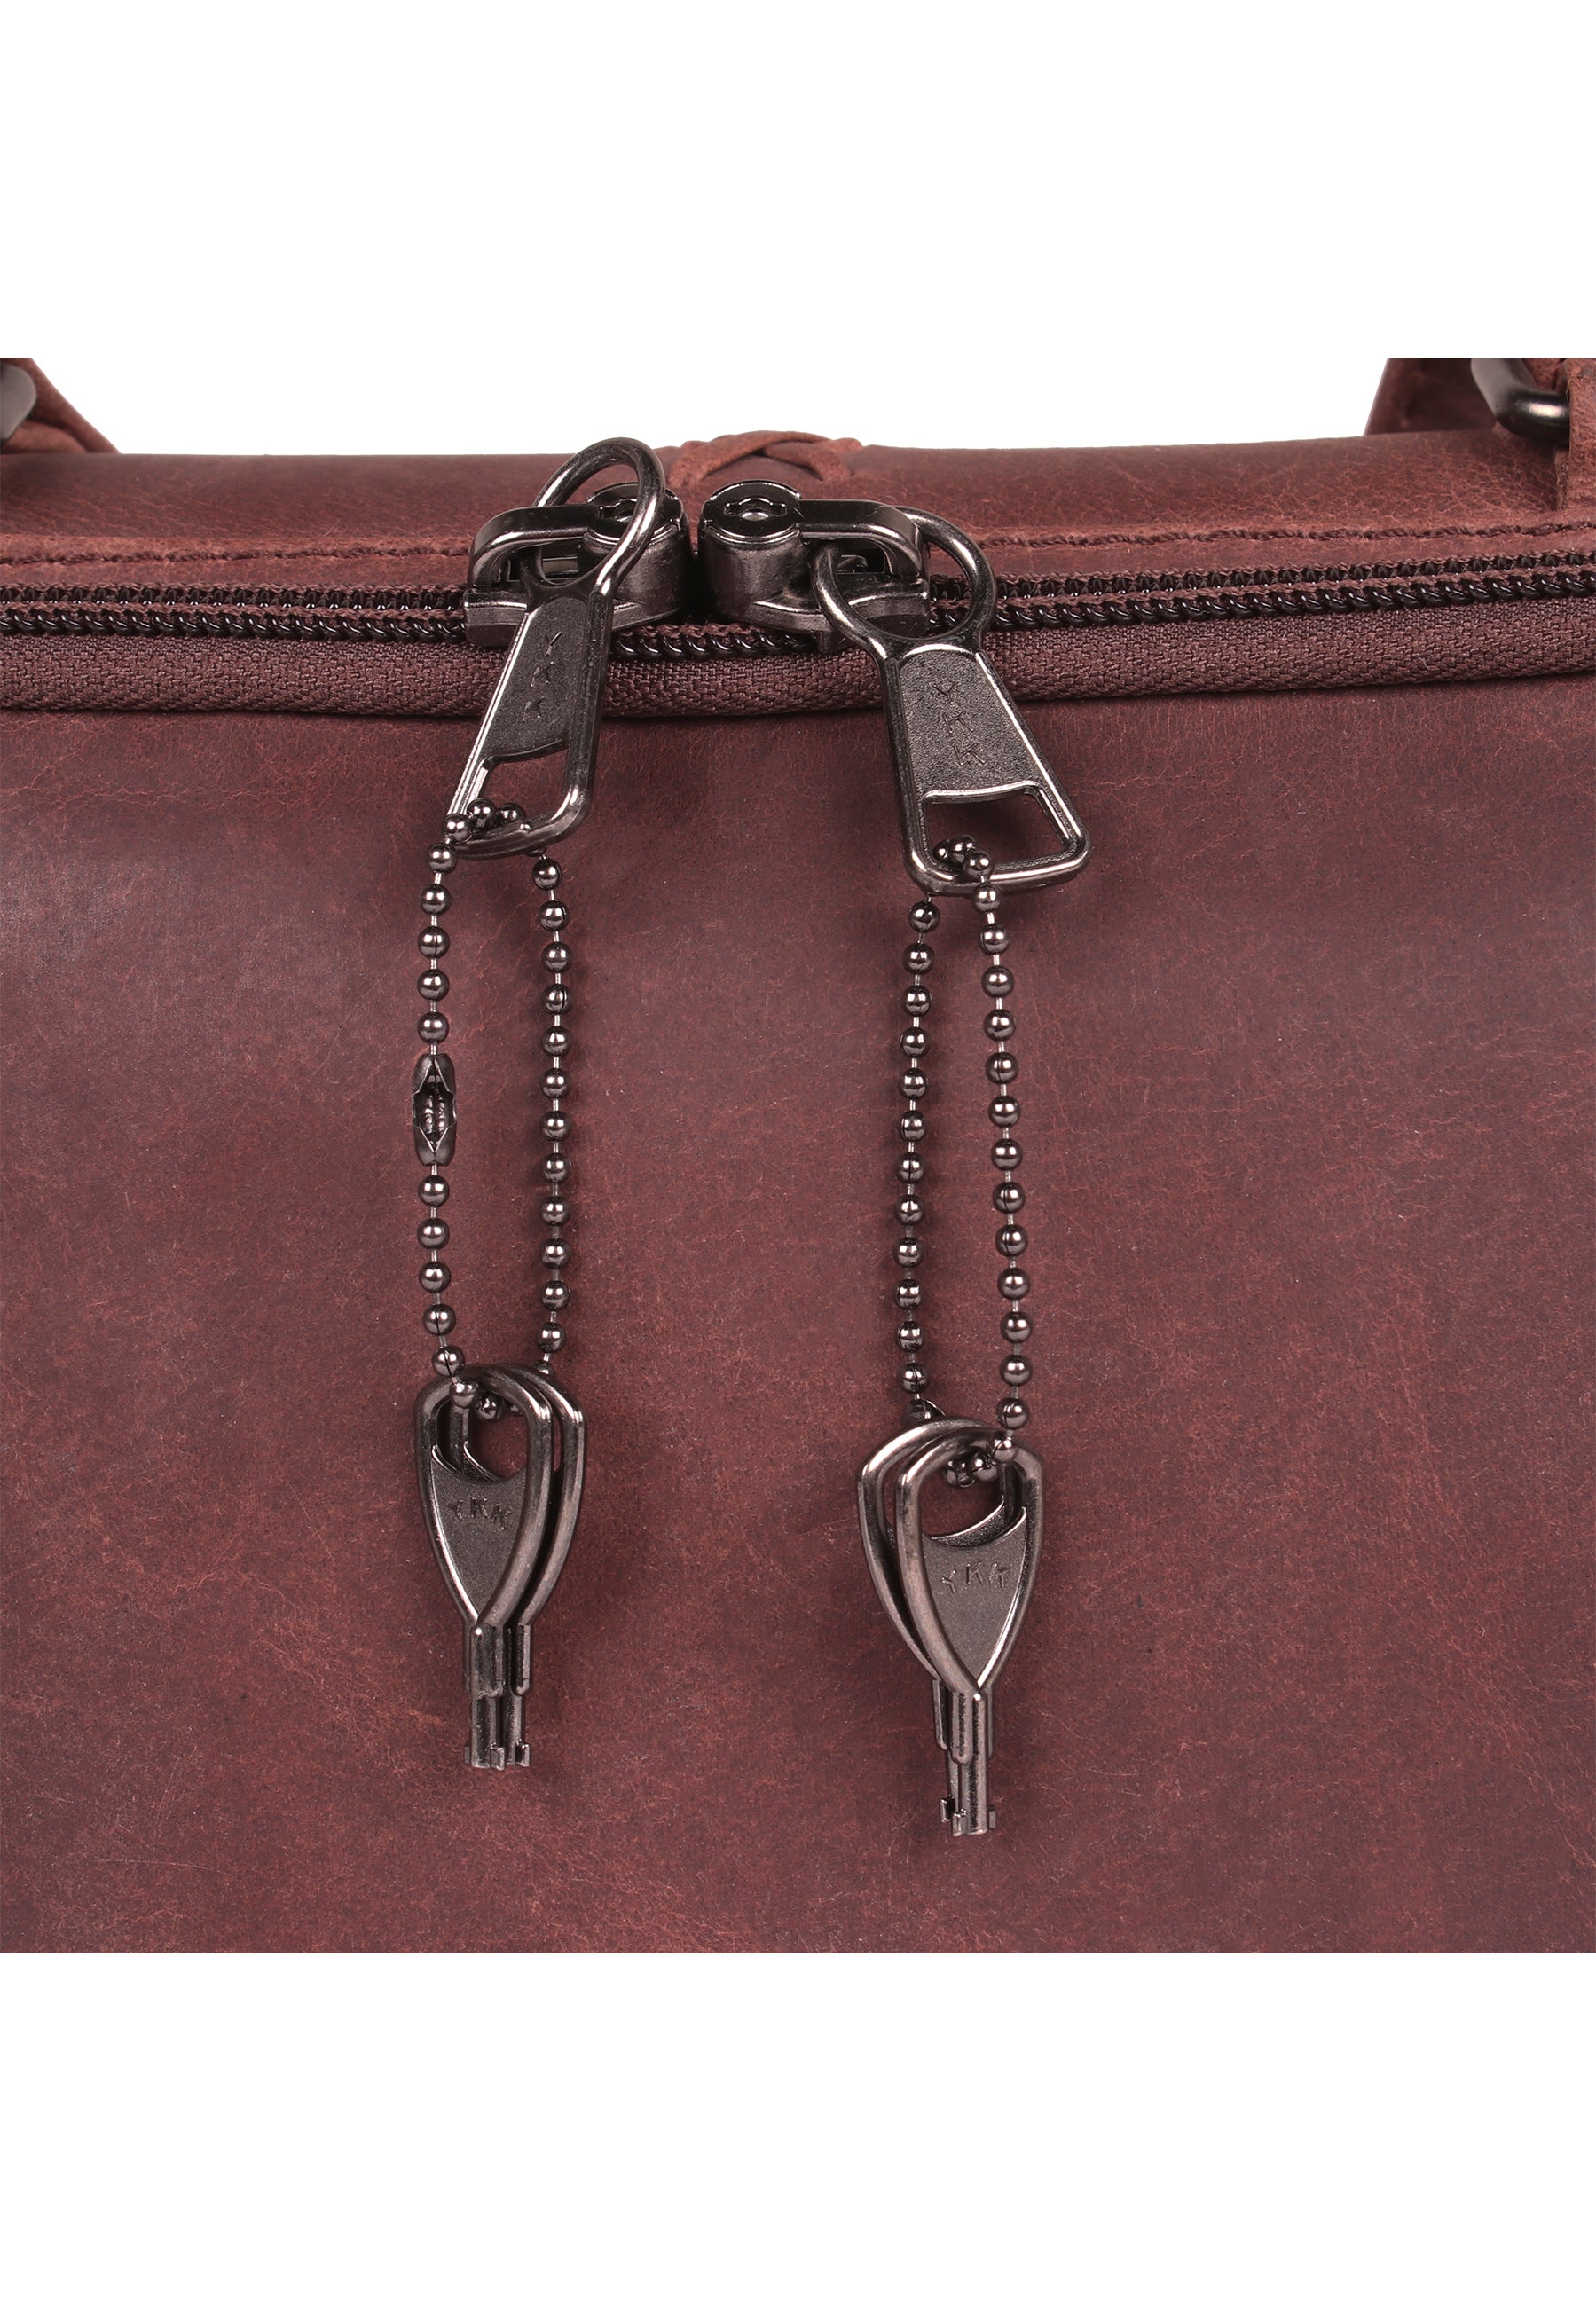 Concealed Carry Purse Review - Hephaestus Tyche Handbag — Elegant & Armed